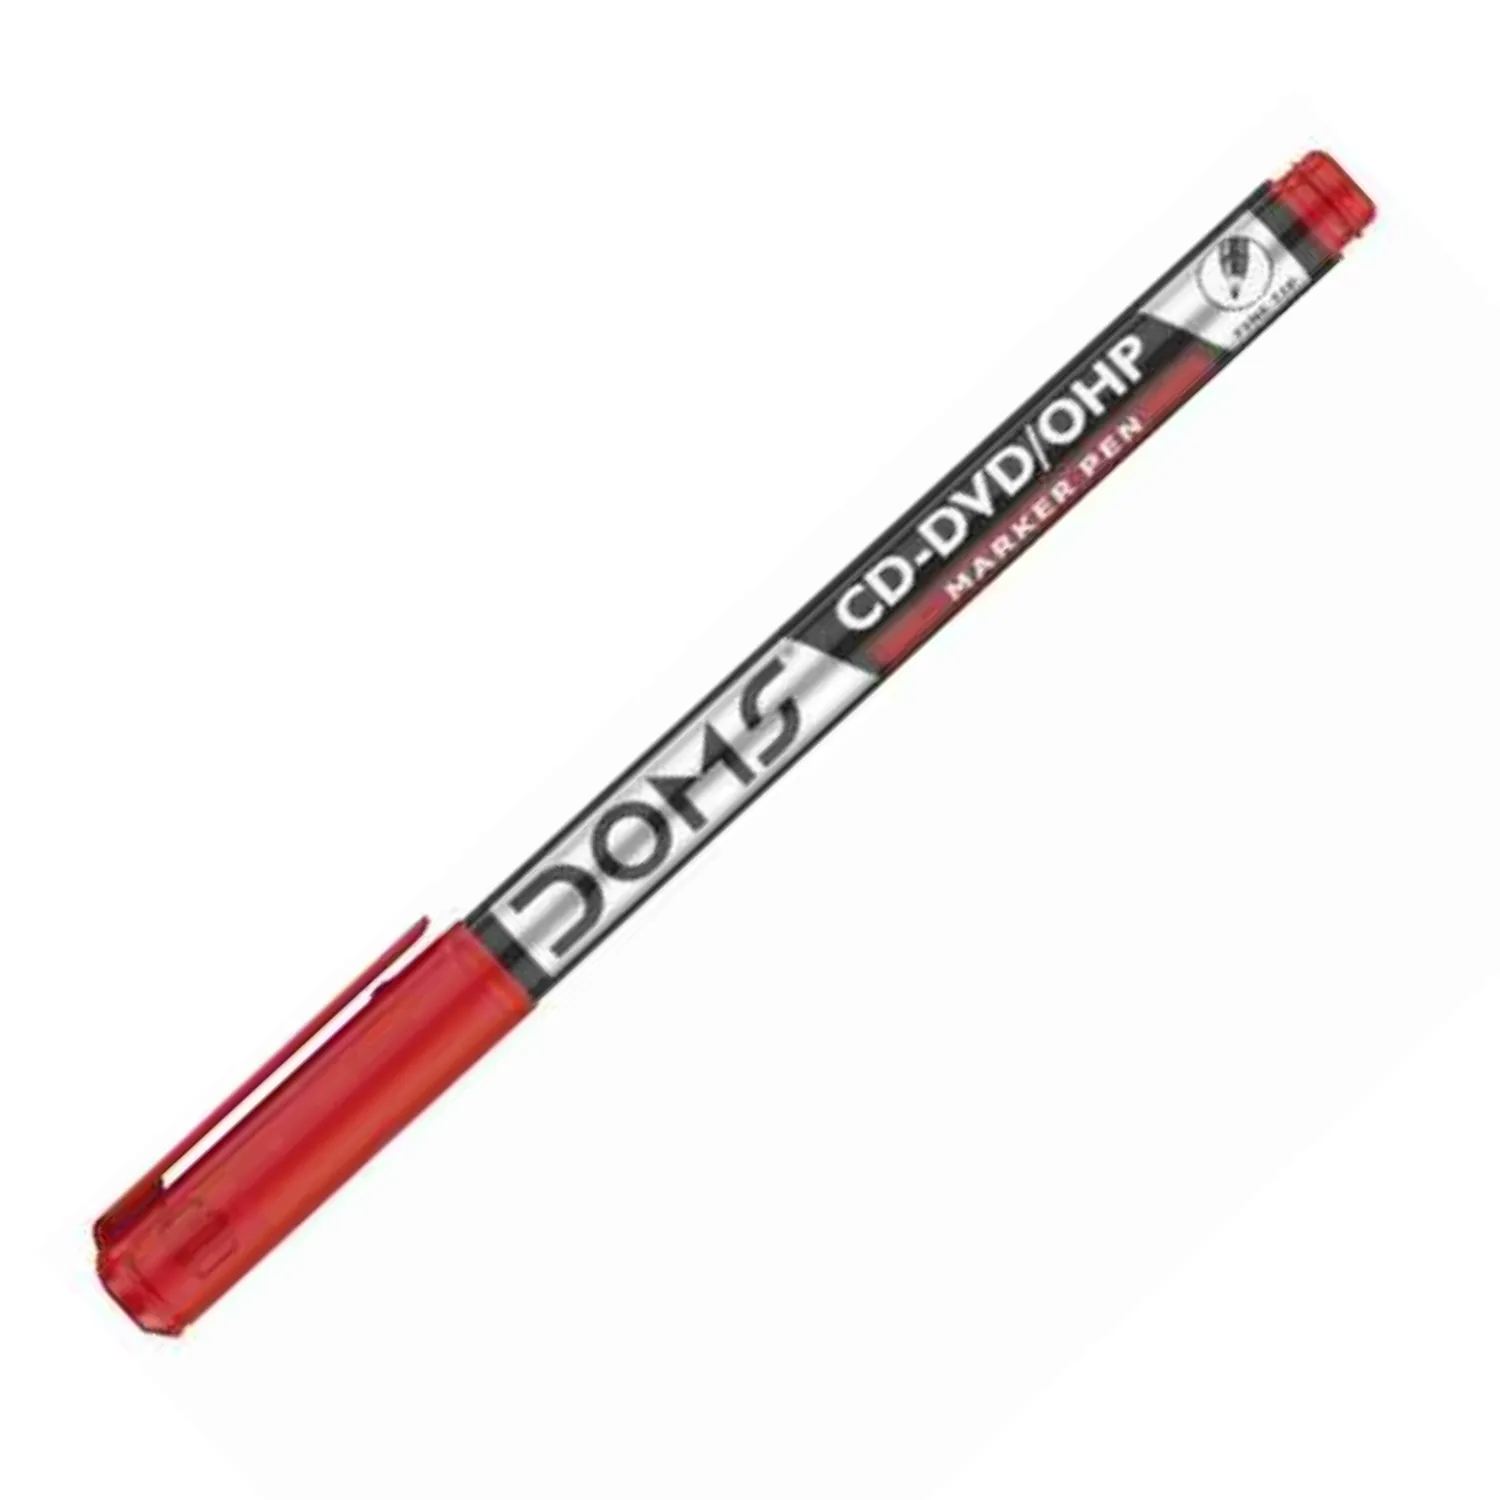 Doms CD- DVD/OHP Marker Pen, Red Color, Pack of 1